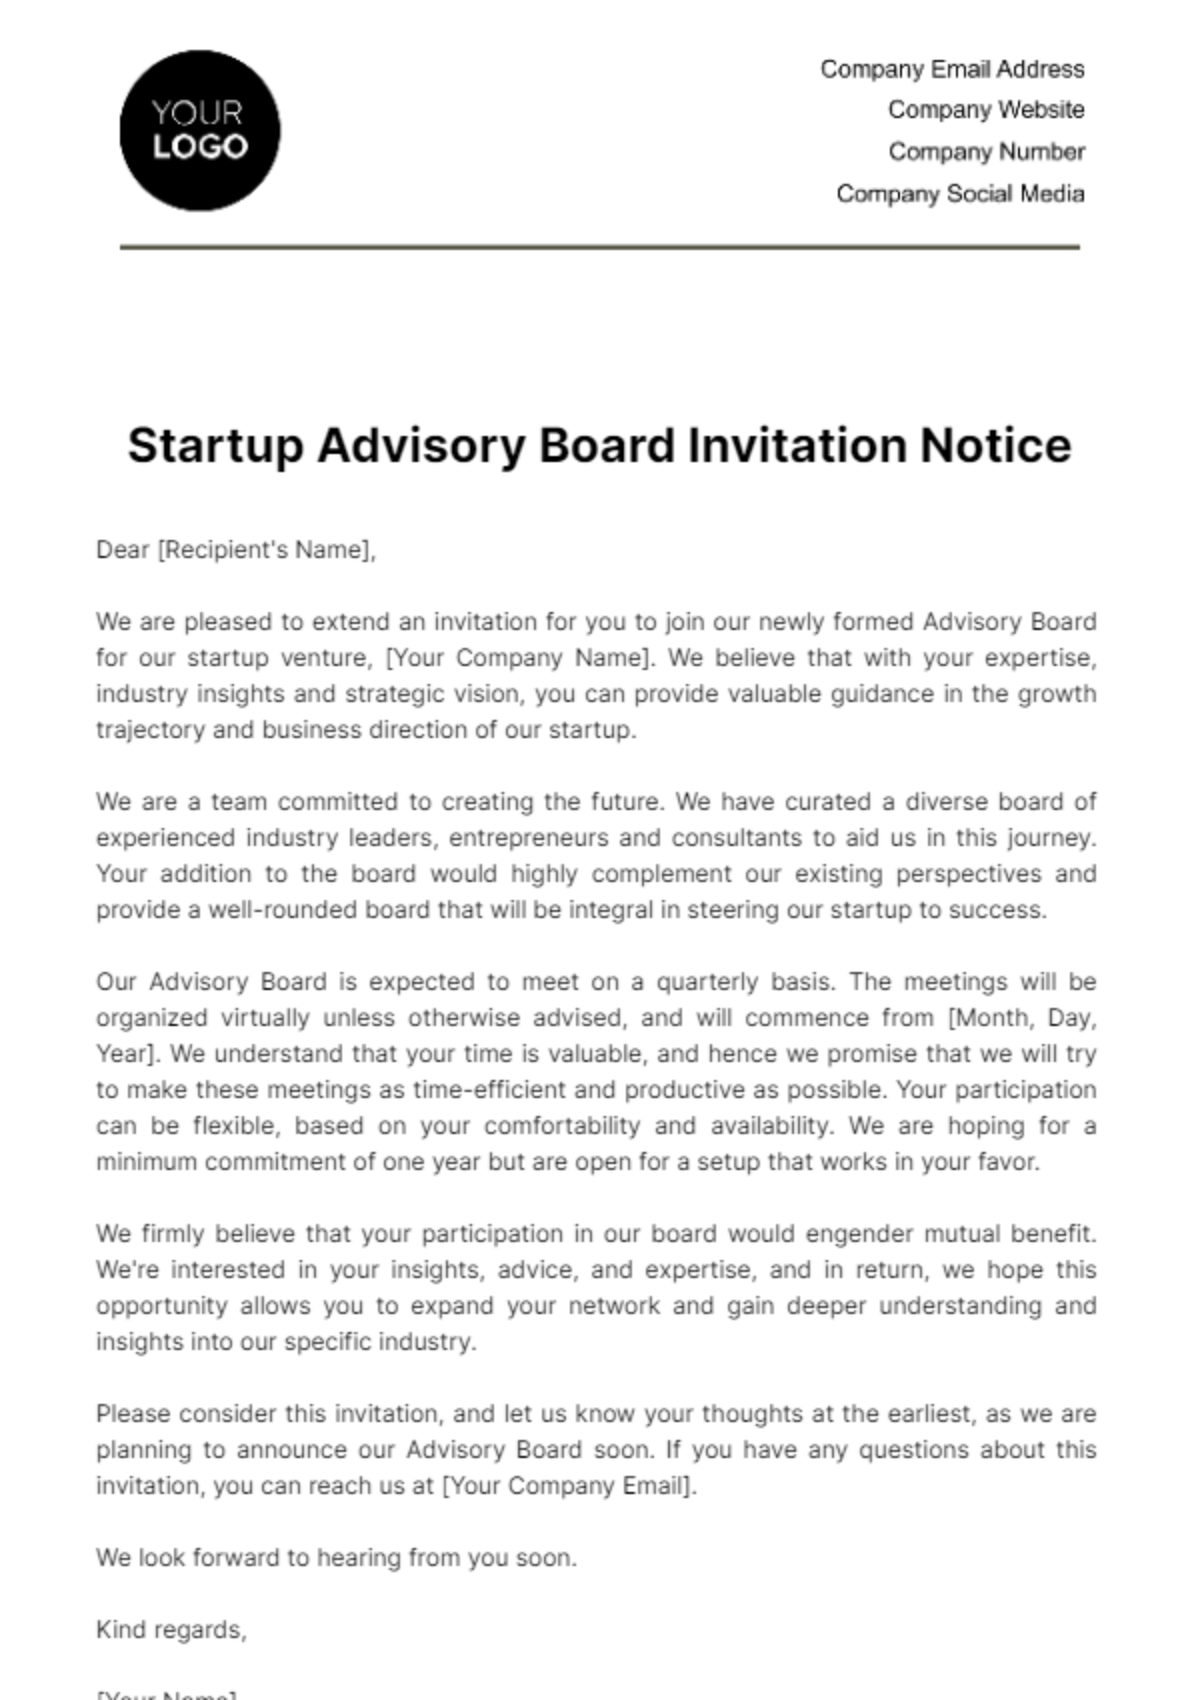 Free Startup Advisory Board Invitation Notice Template